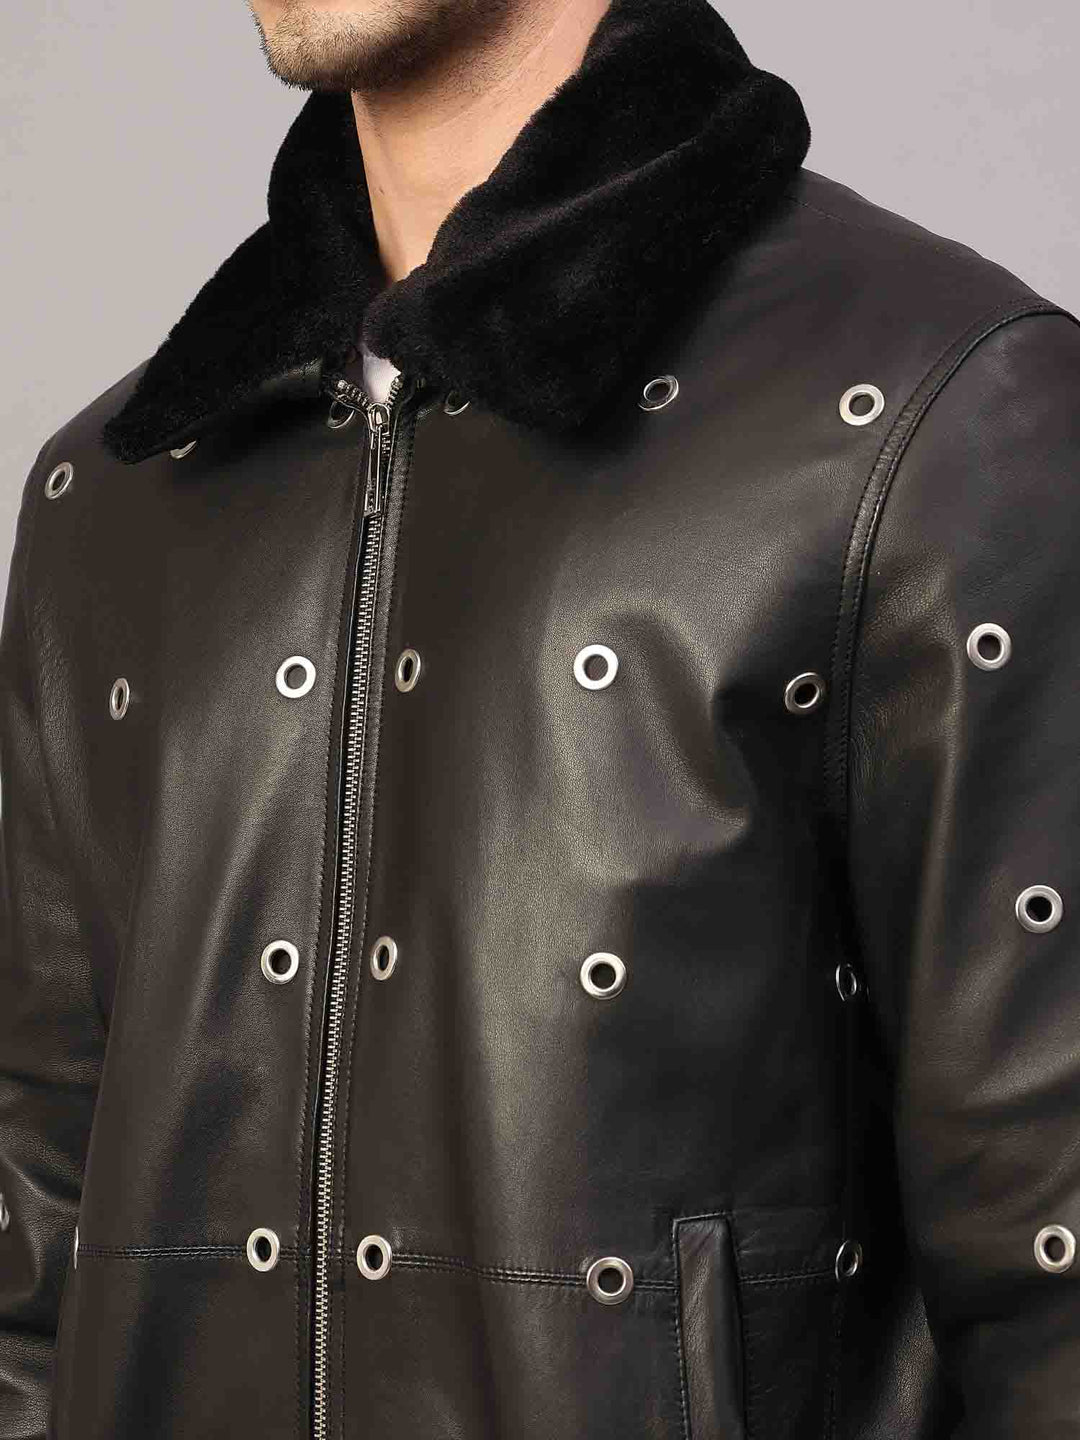 Saint Joshua Black Leather Men's Jackets